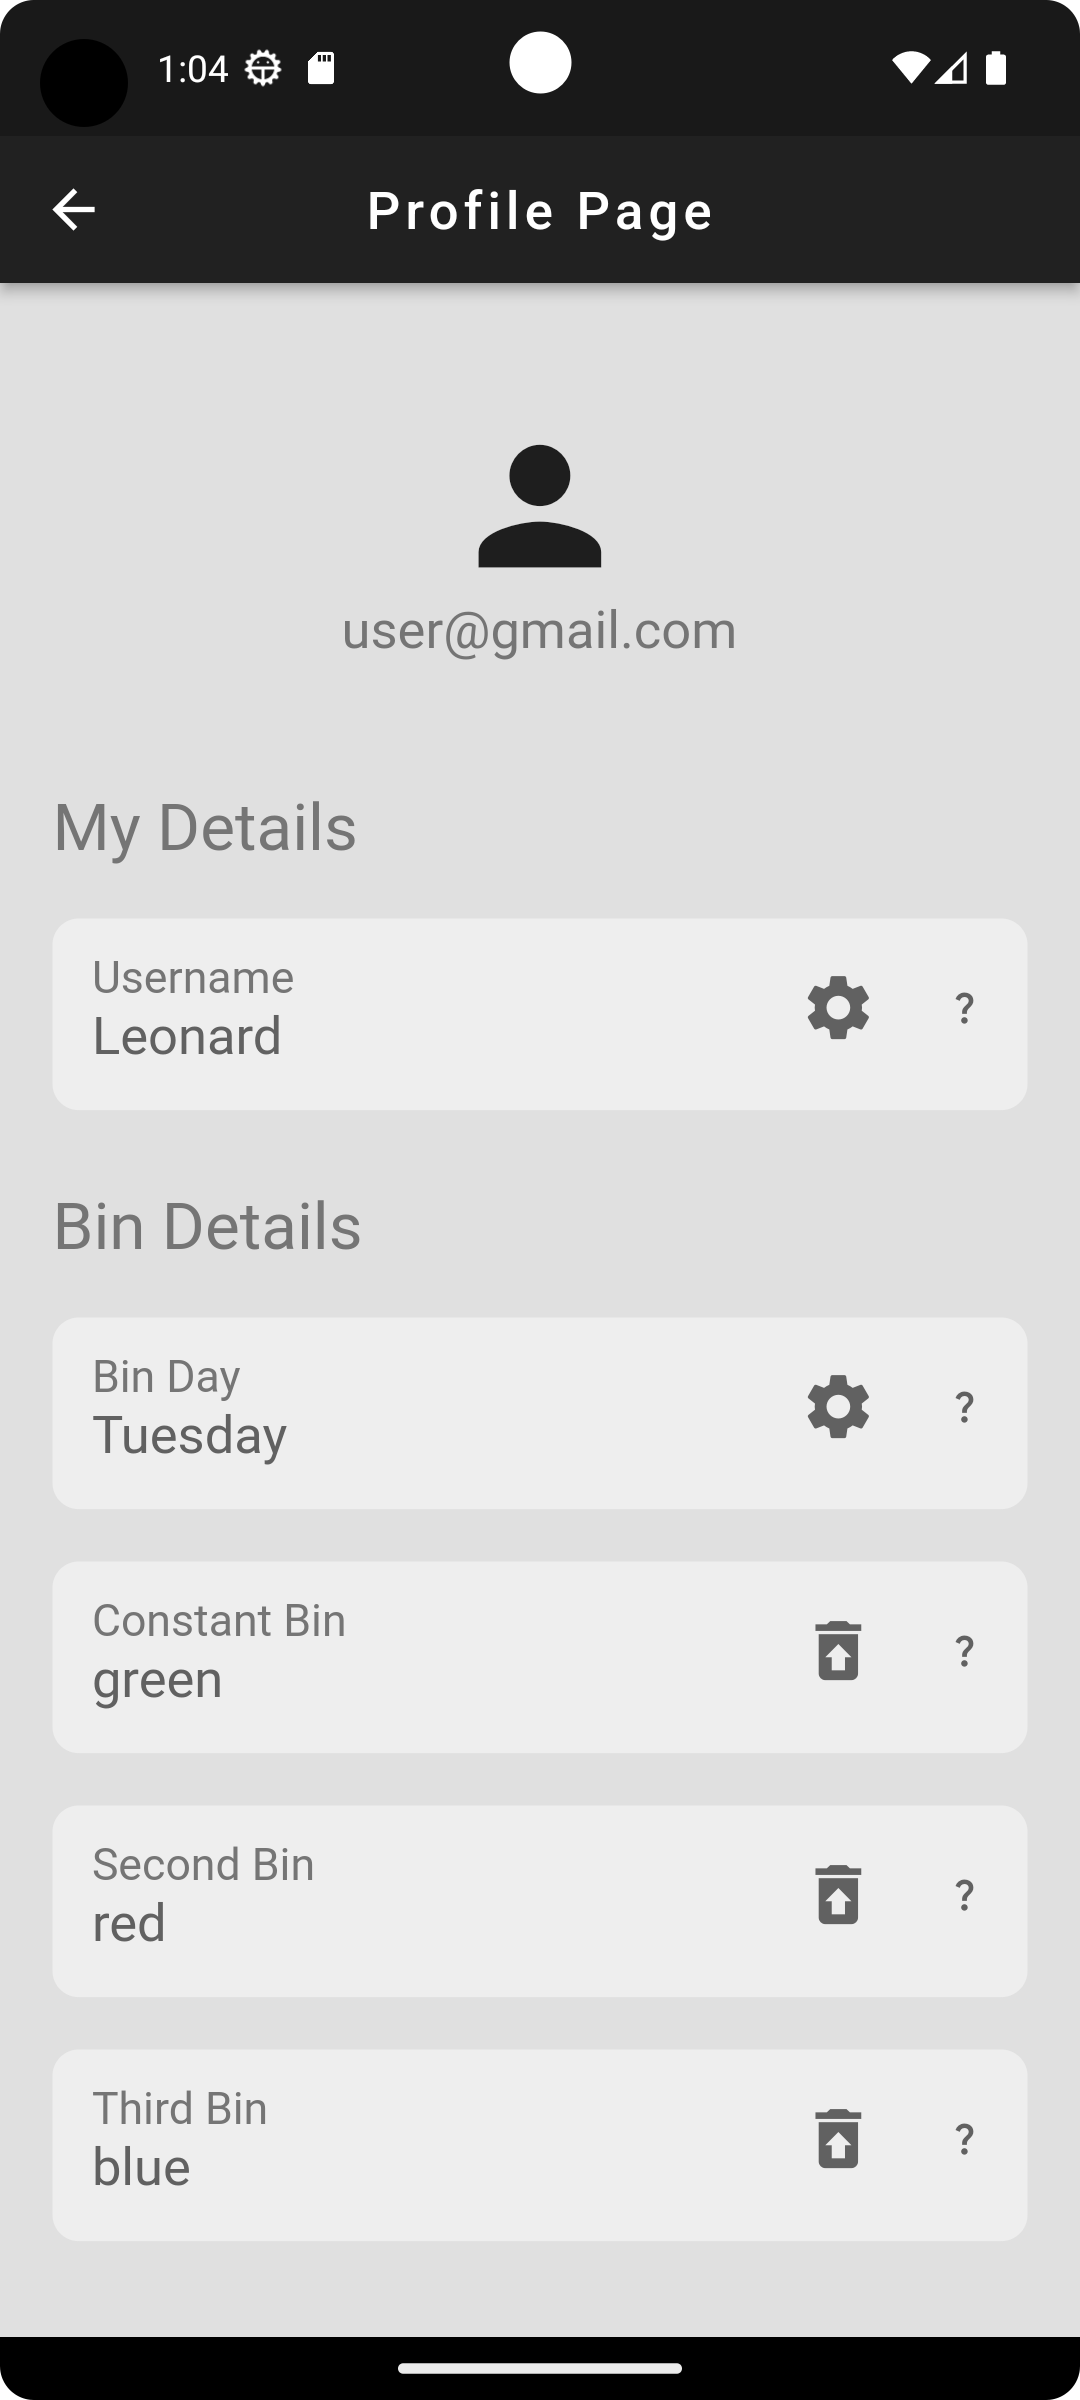 Bin Day Profile Page